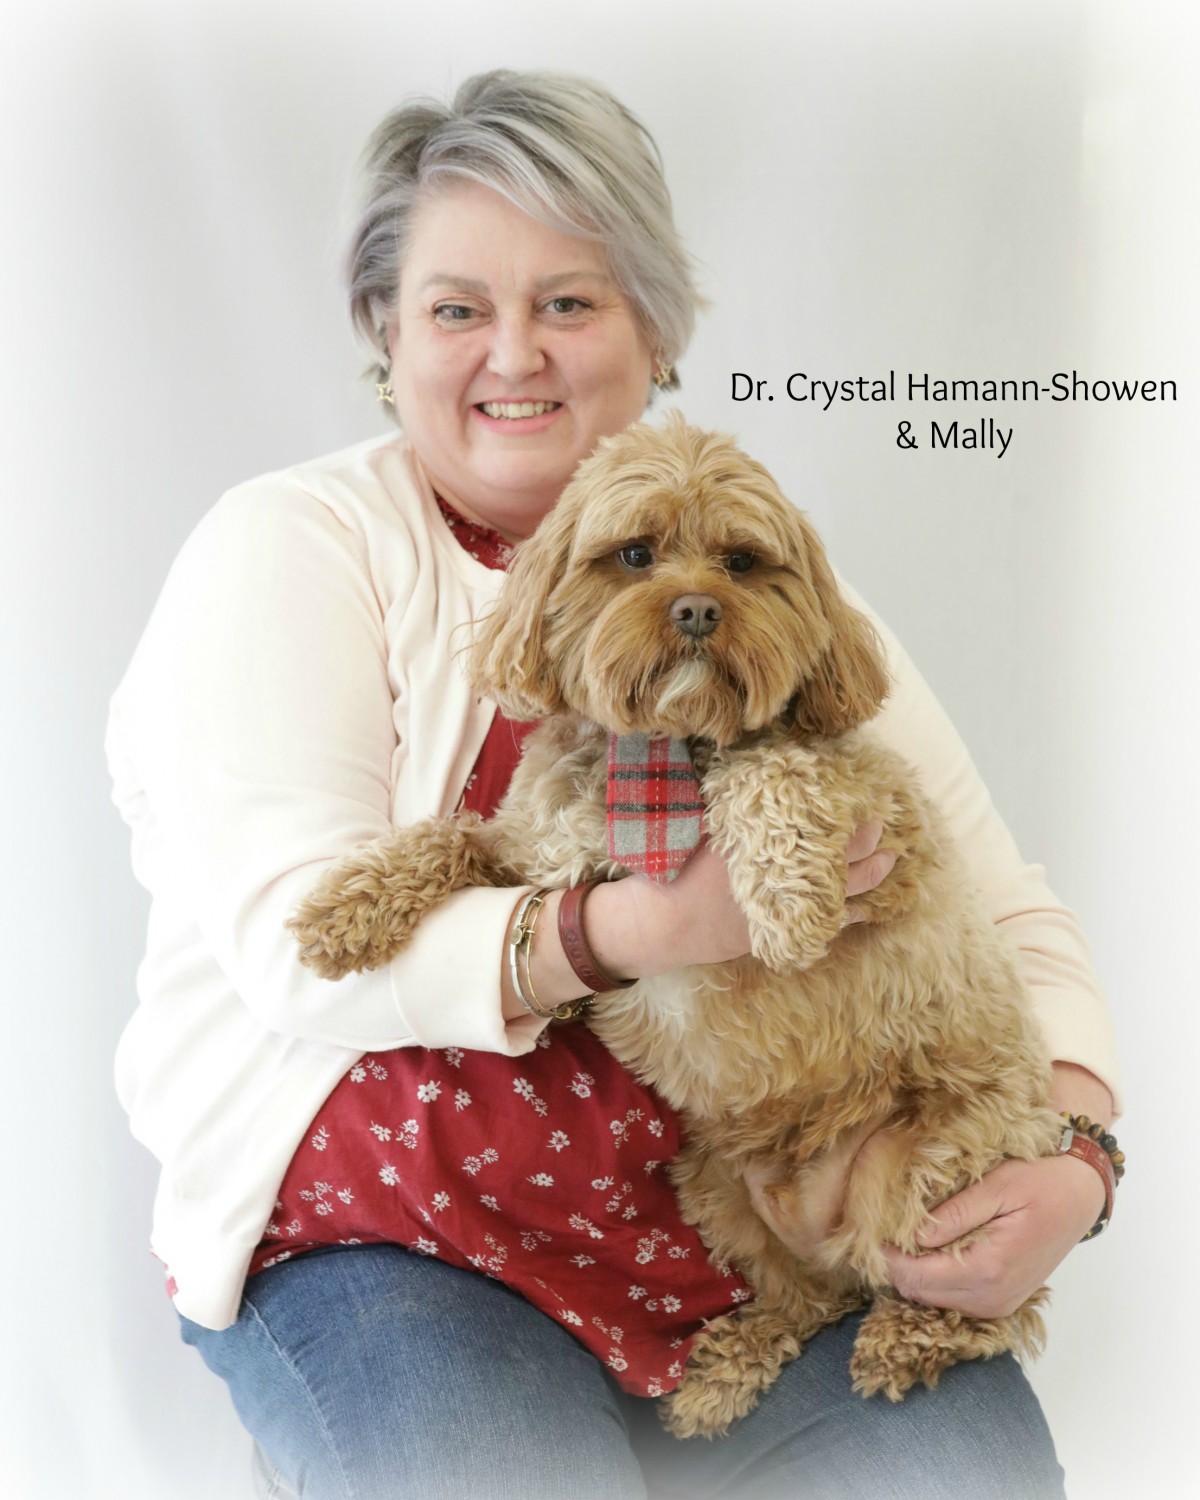 Dr. Crystal Hamann-Showen